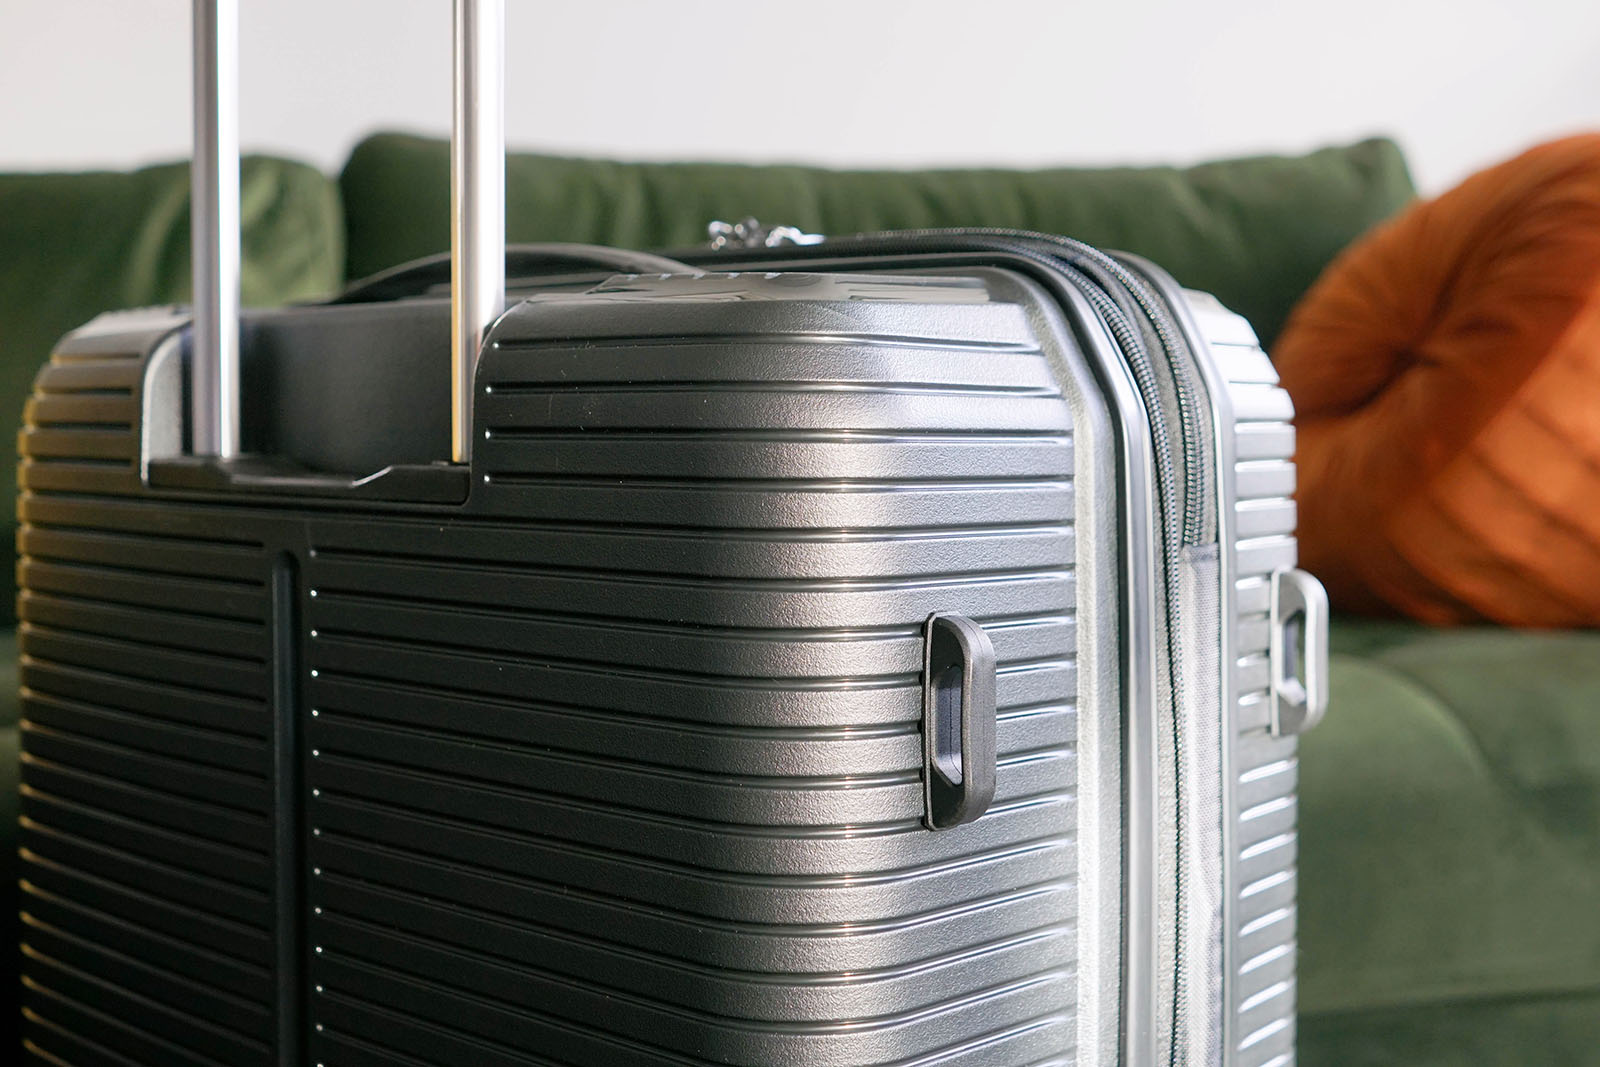 Is a Rimowa suitcase worth the money? - Jon Worth